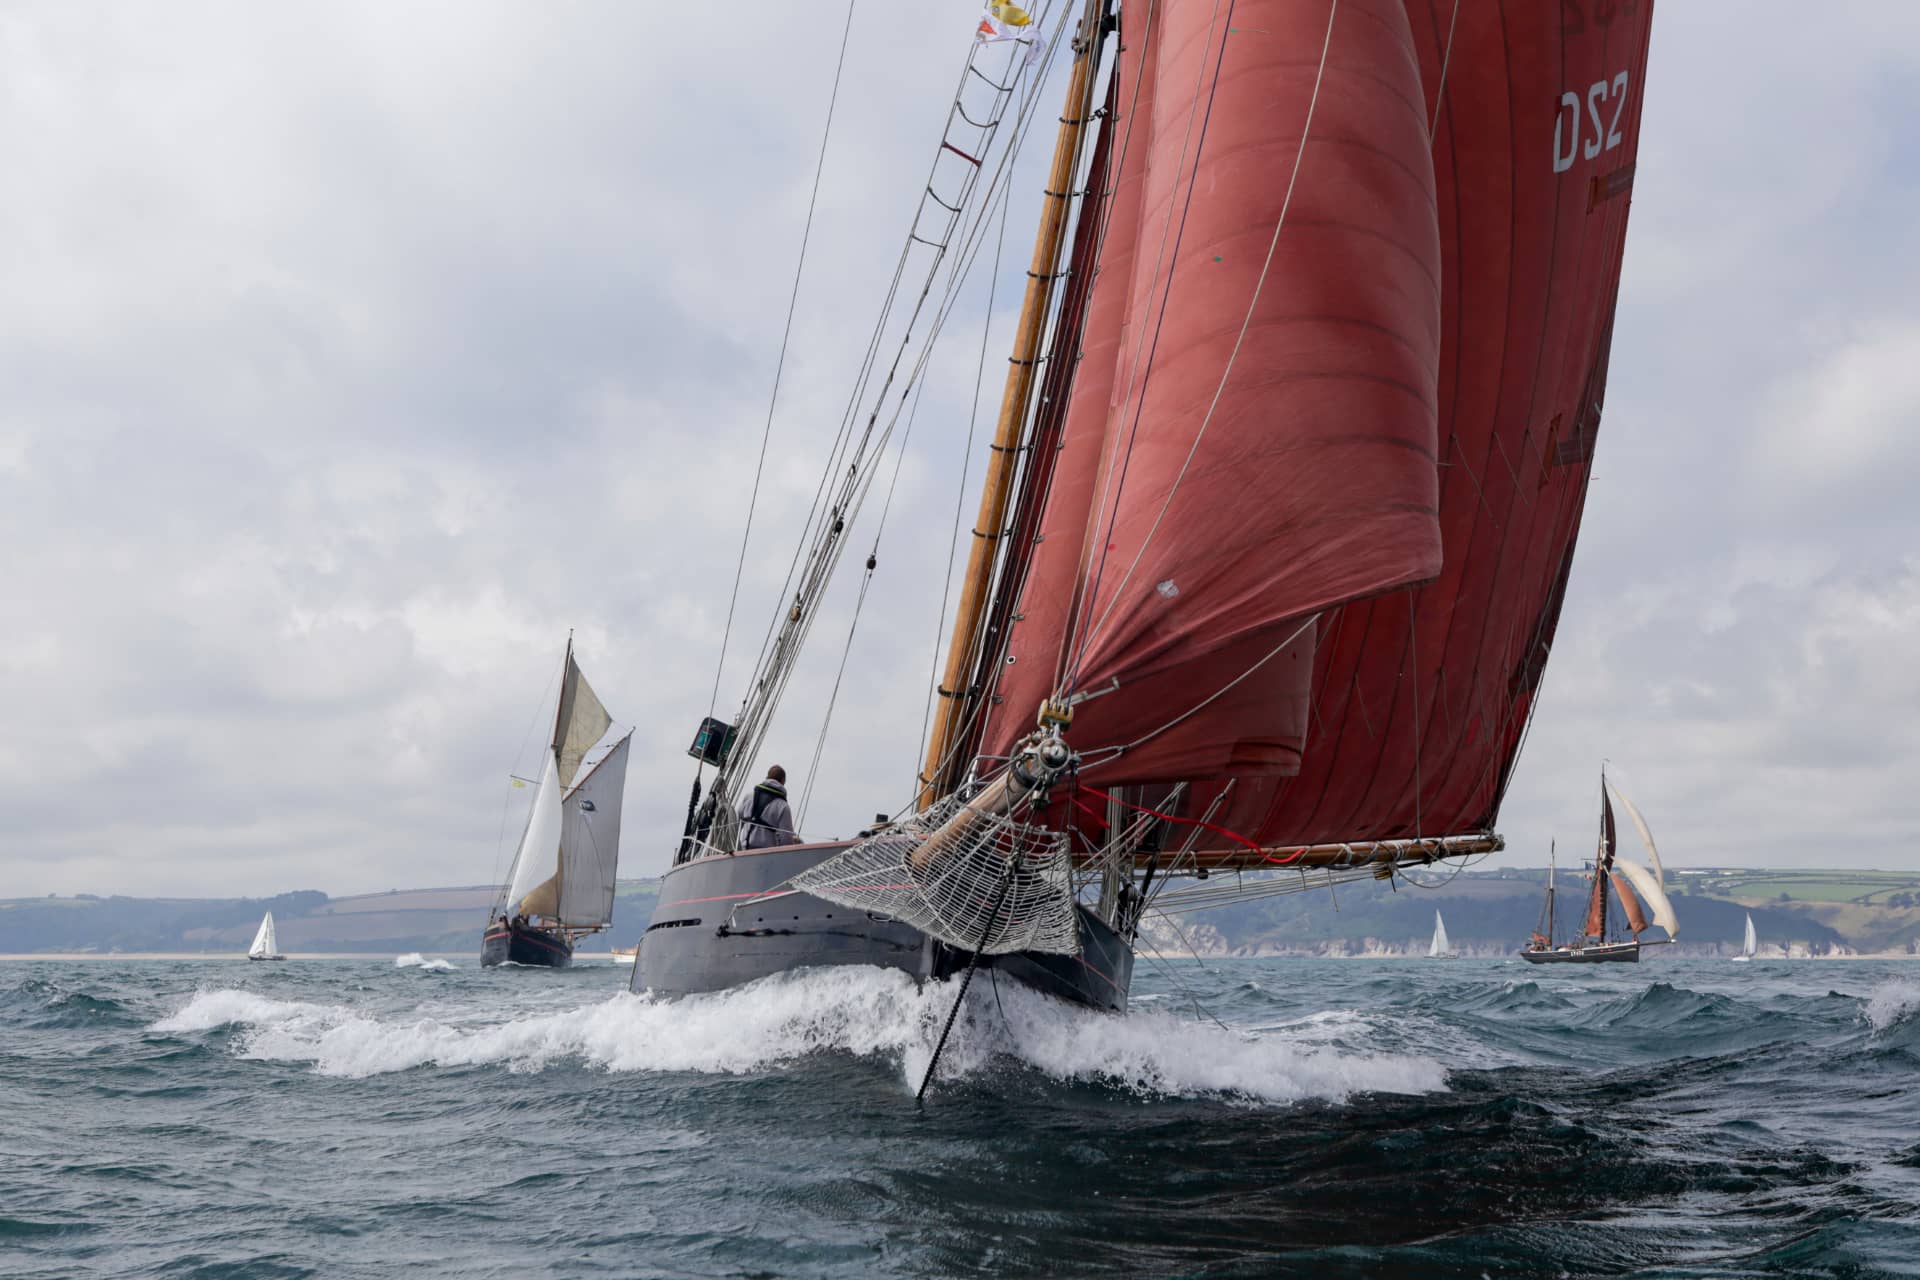 Jolie Brise Small Ships Race